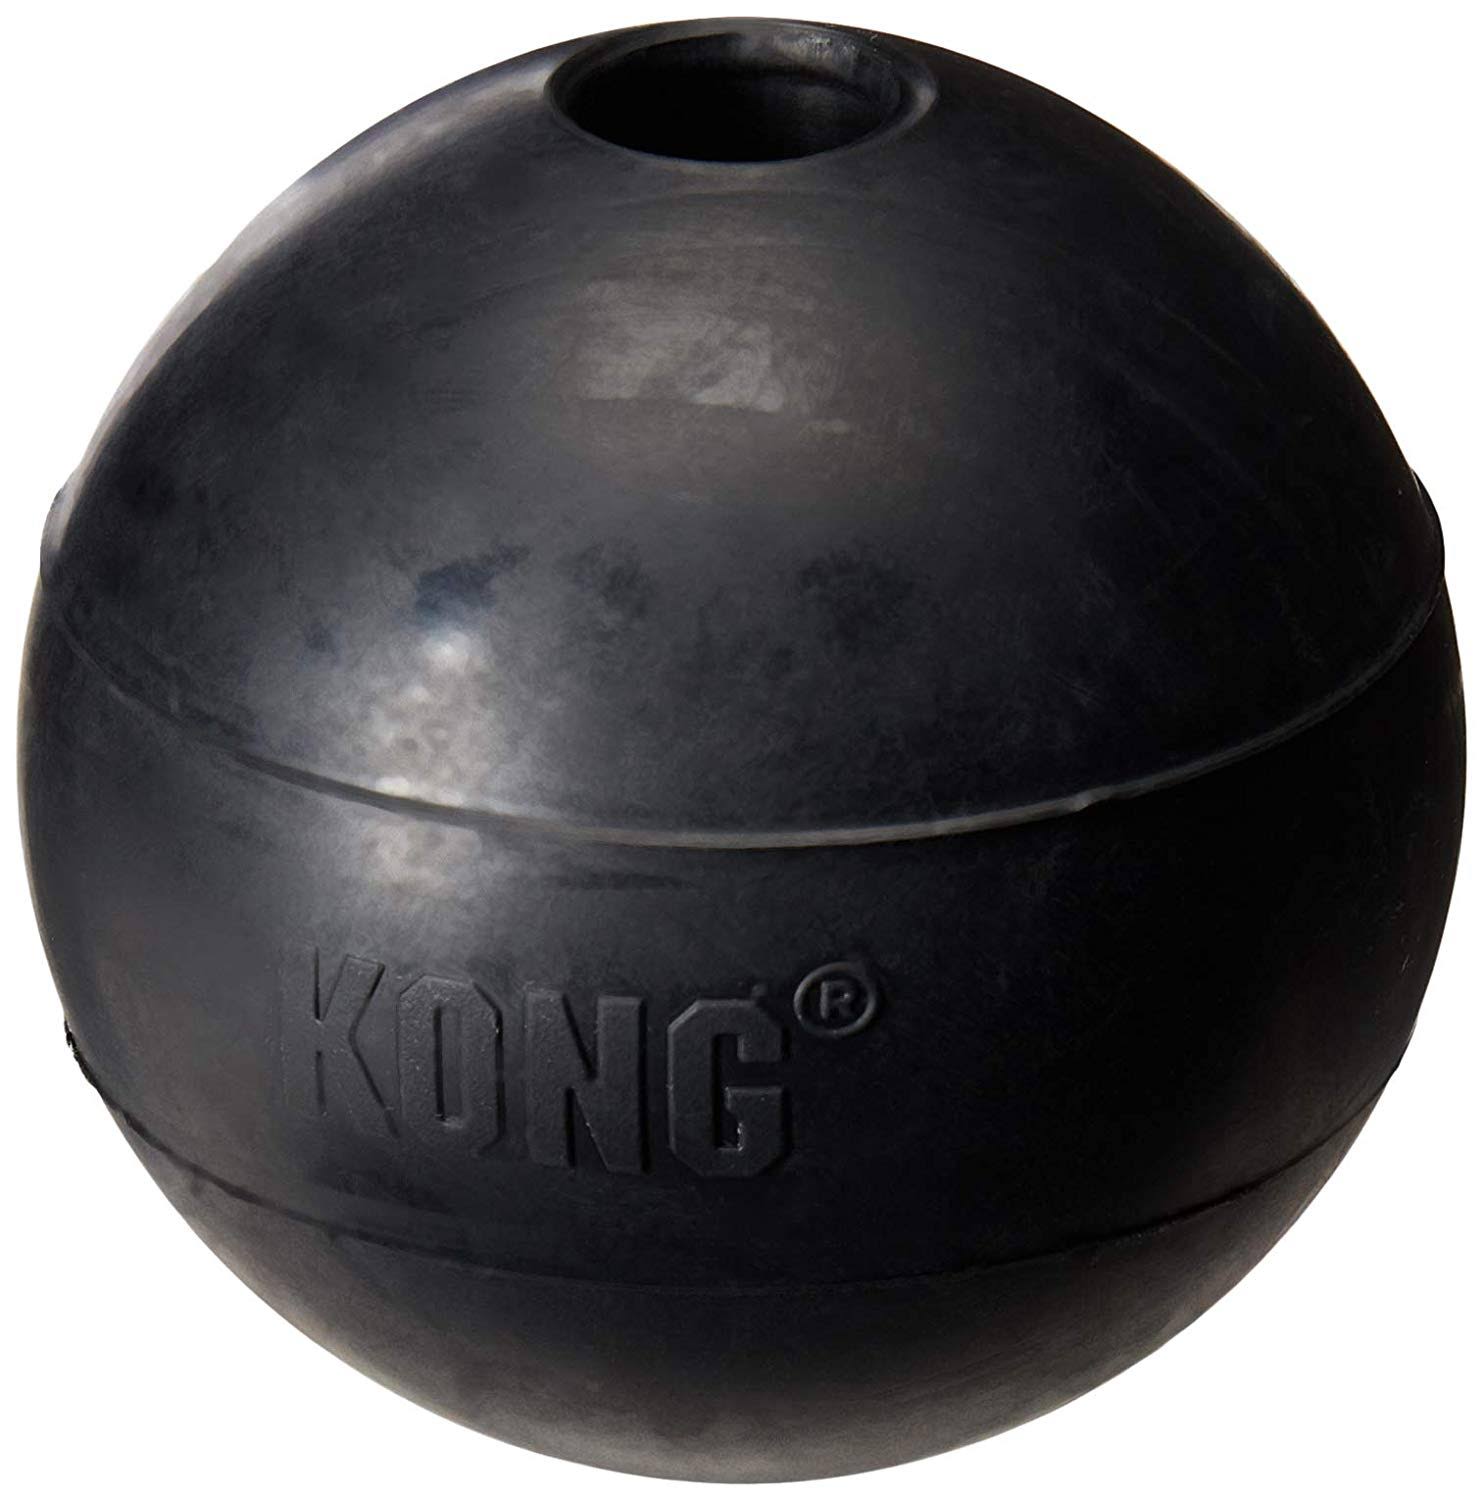 Kong Extreme Ball - Black, Medium